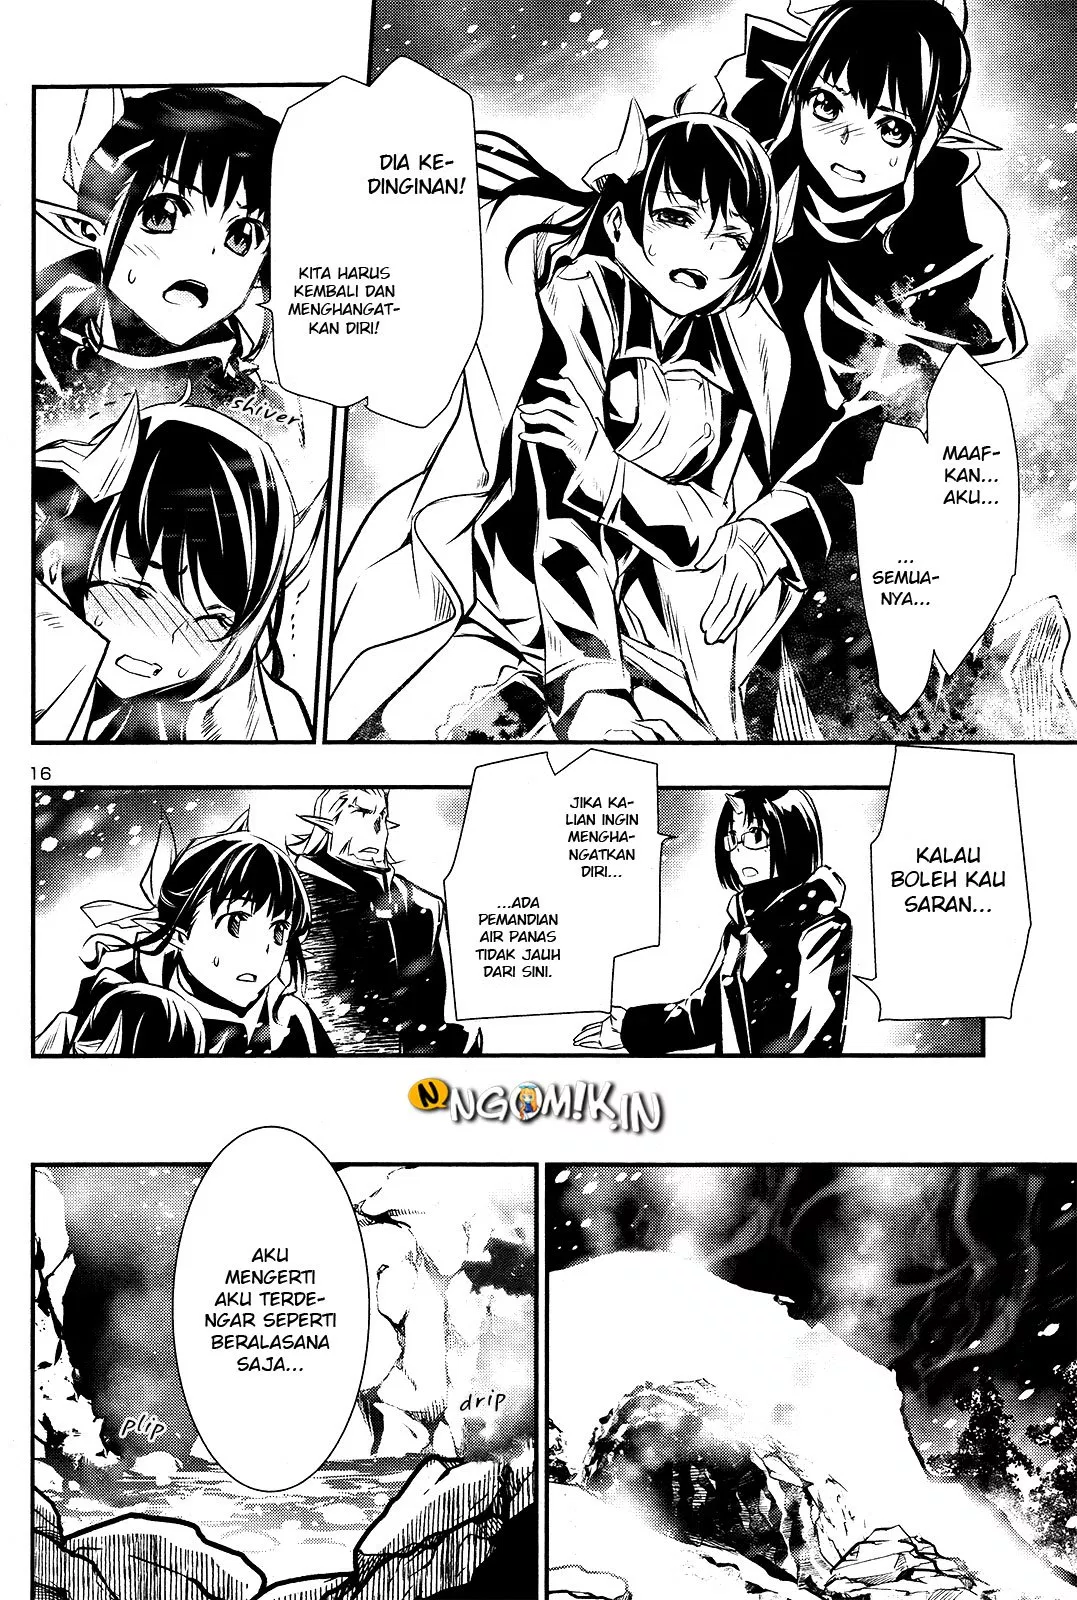 Shinju no Nectar Chapter 24